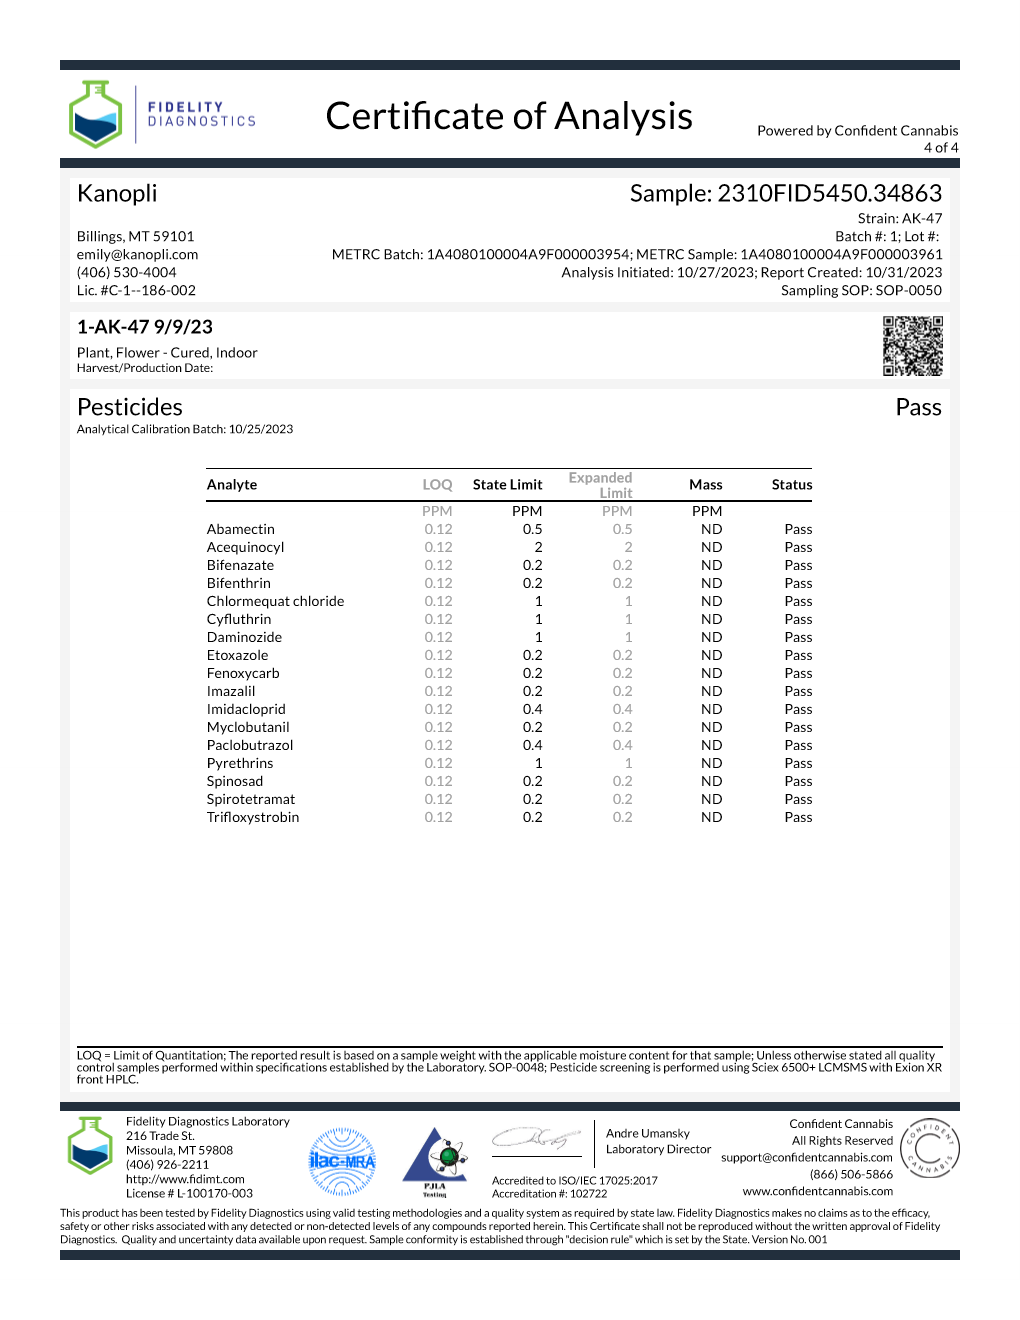 AK-47 - Sativa 29.90% THC (Sept. 2023) MEDICAL